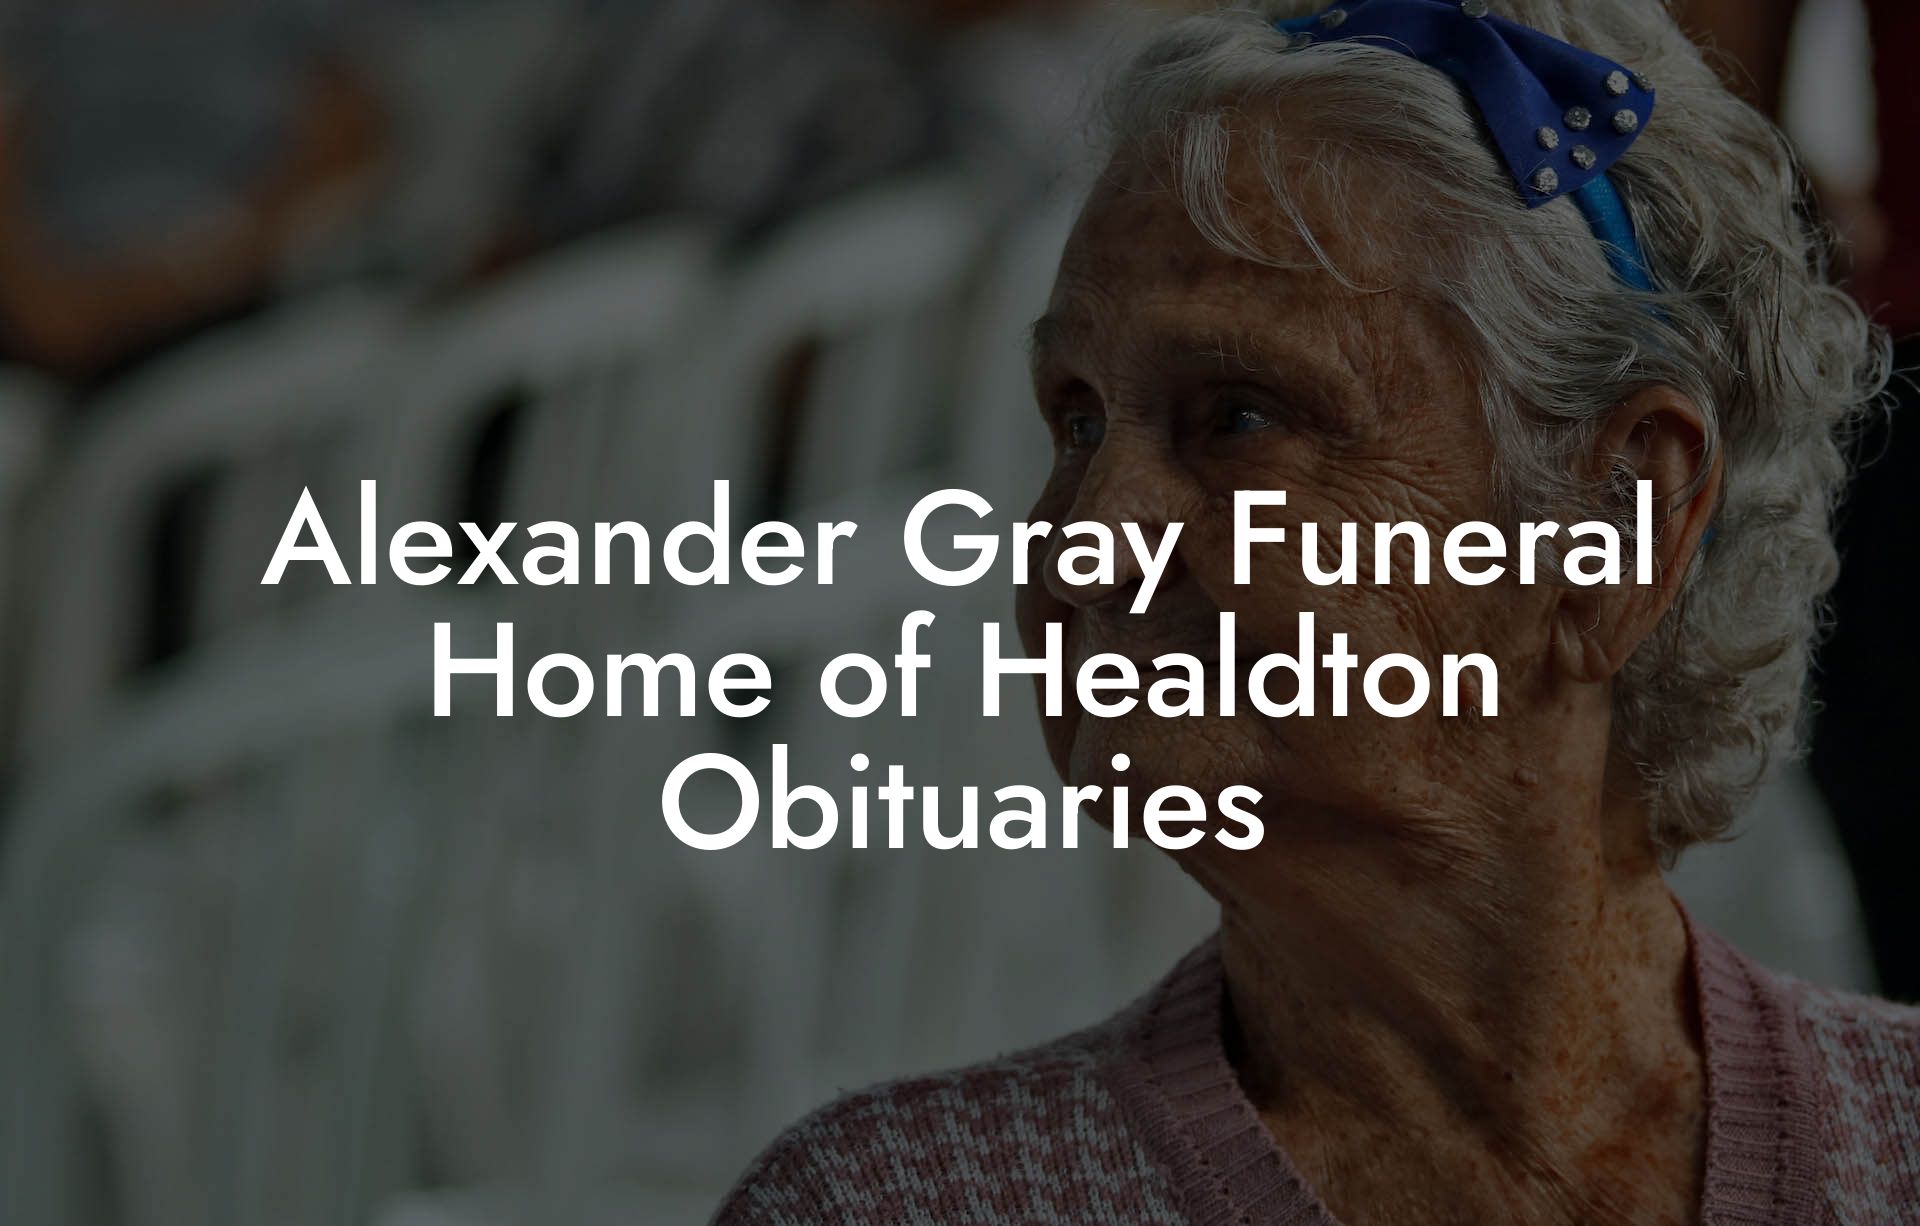 Alexander Gray Funeral Home of Healdton Obituaries